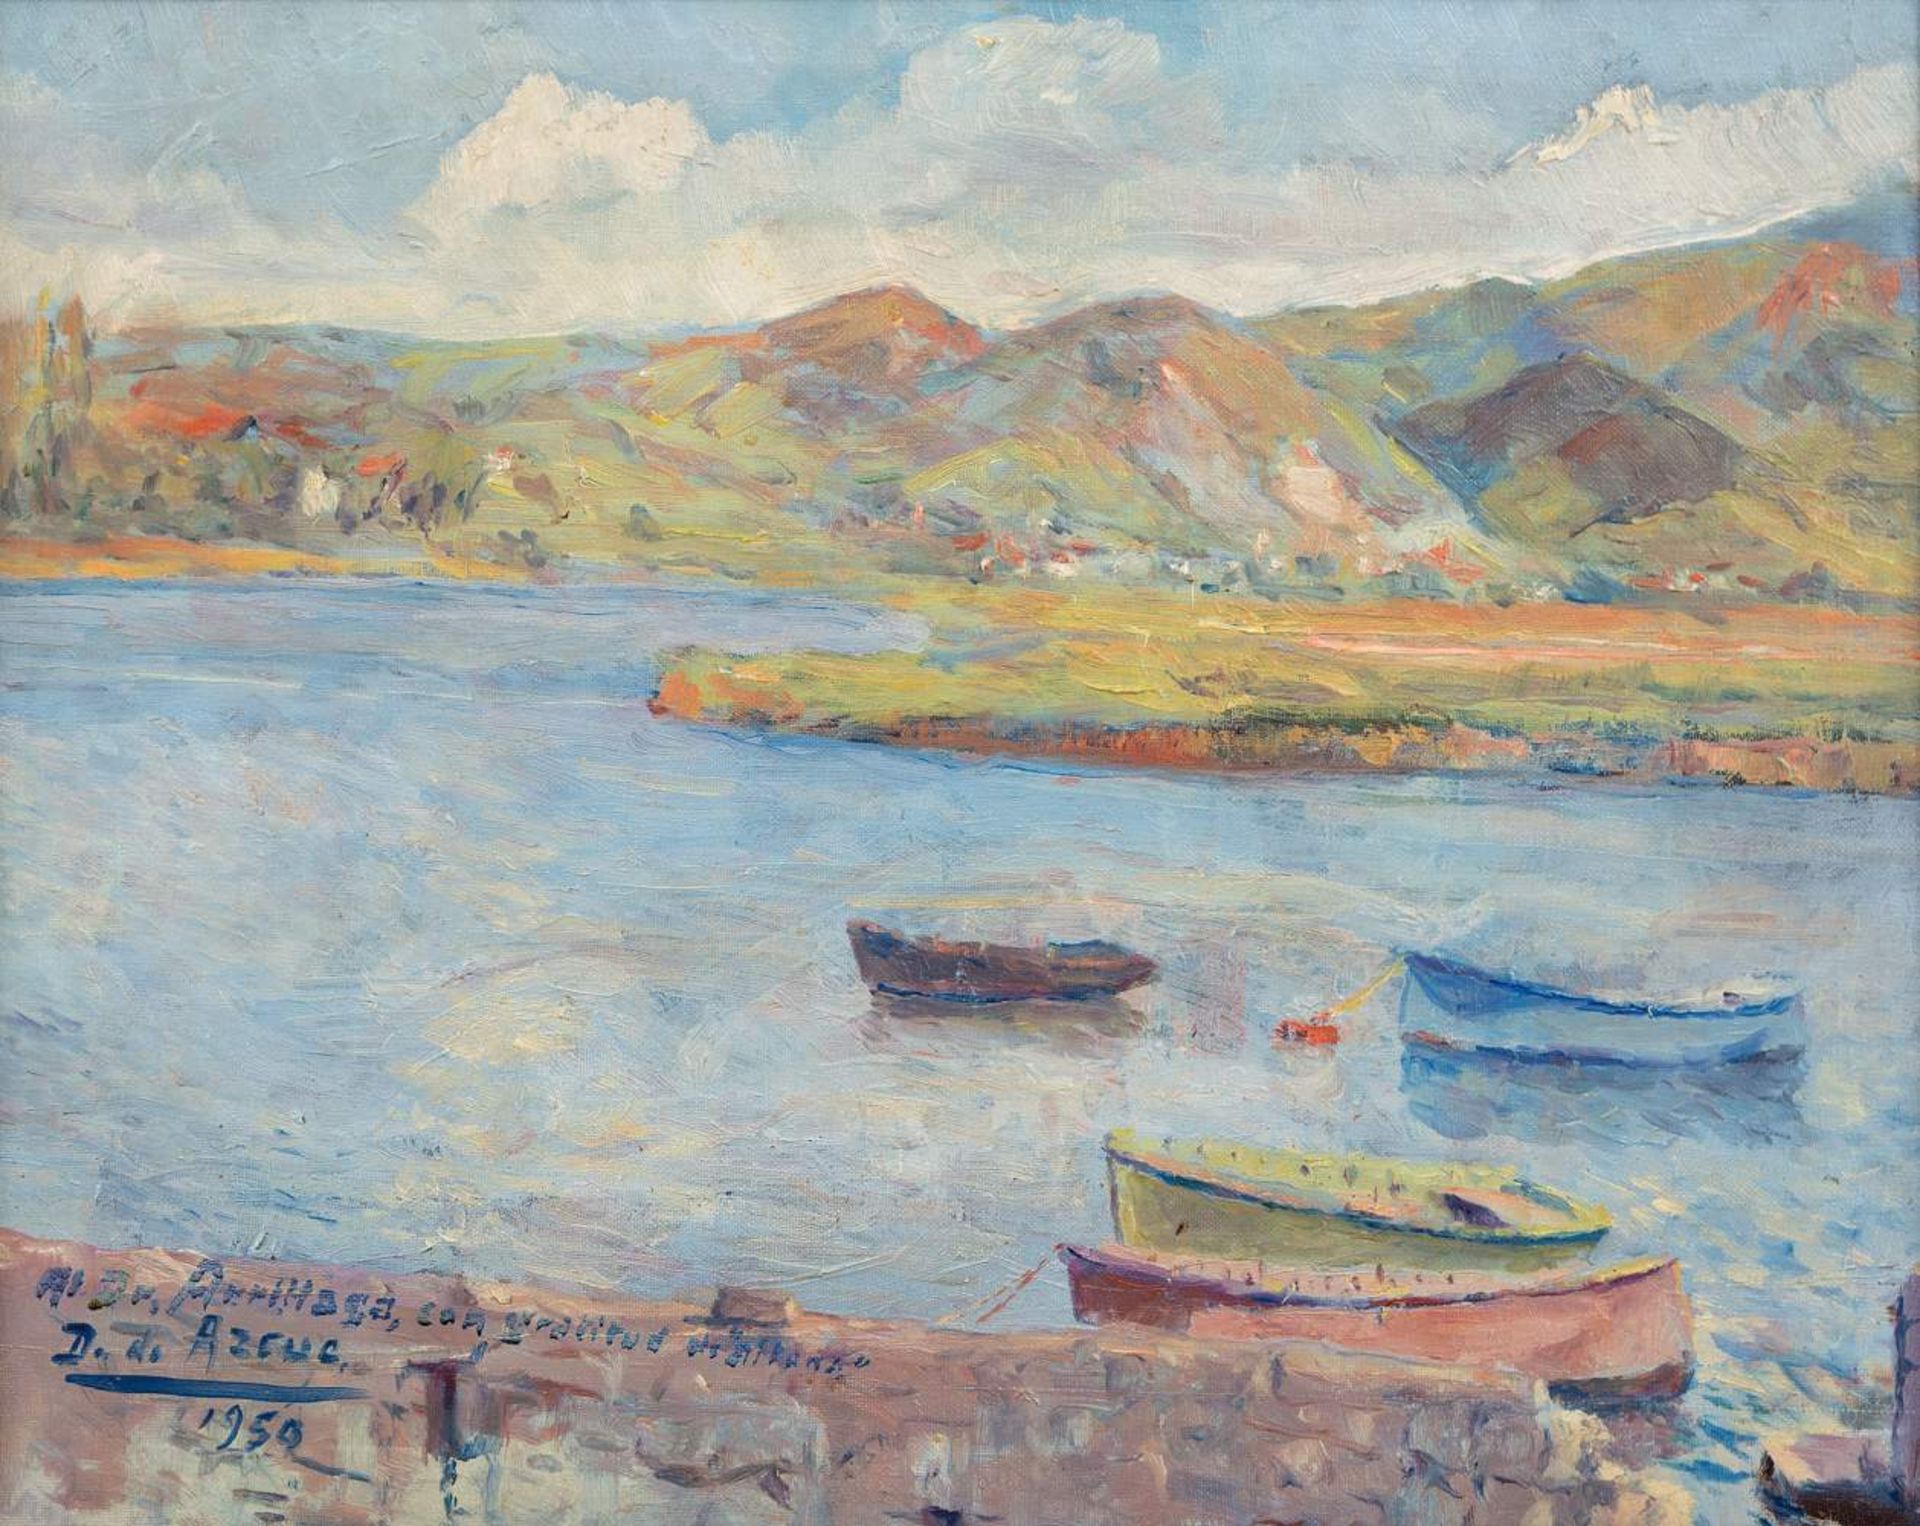 DIONISIO AZCUE (Guipúzcoa, 1885-1964) Paisaje con barcas Óleo/Lienzo. 1950 firmado: D. de Azcue.